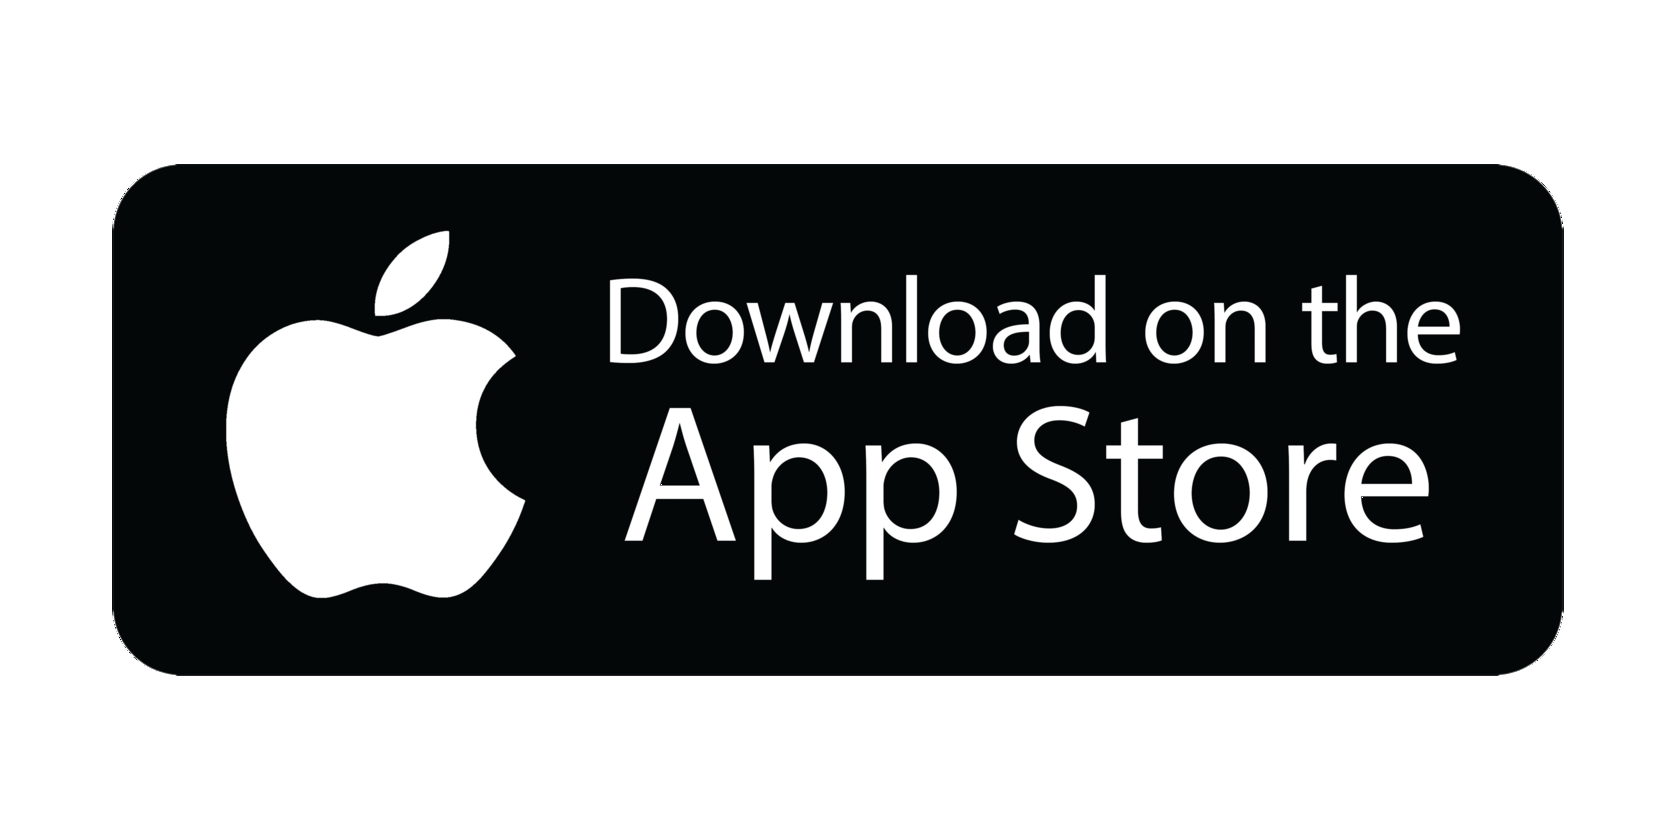 App store 5. Кнопка апстор. Apple Store Google Play. Доступно в app Store. Кнопка download on the app Store.